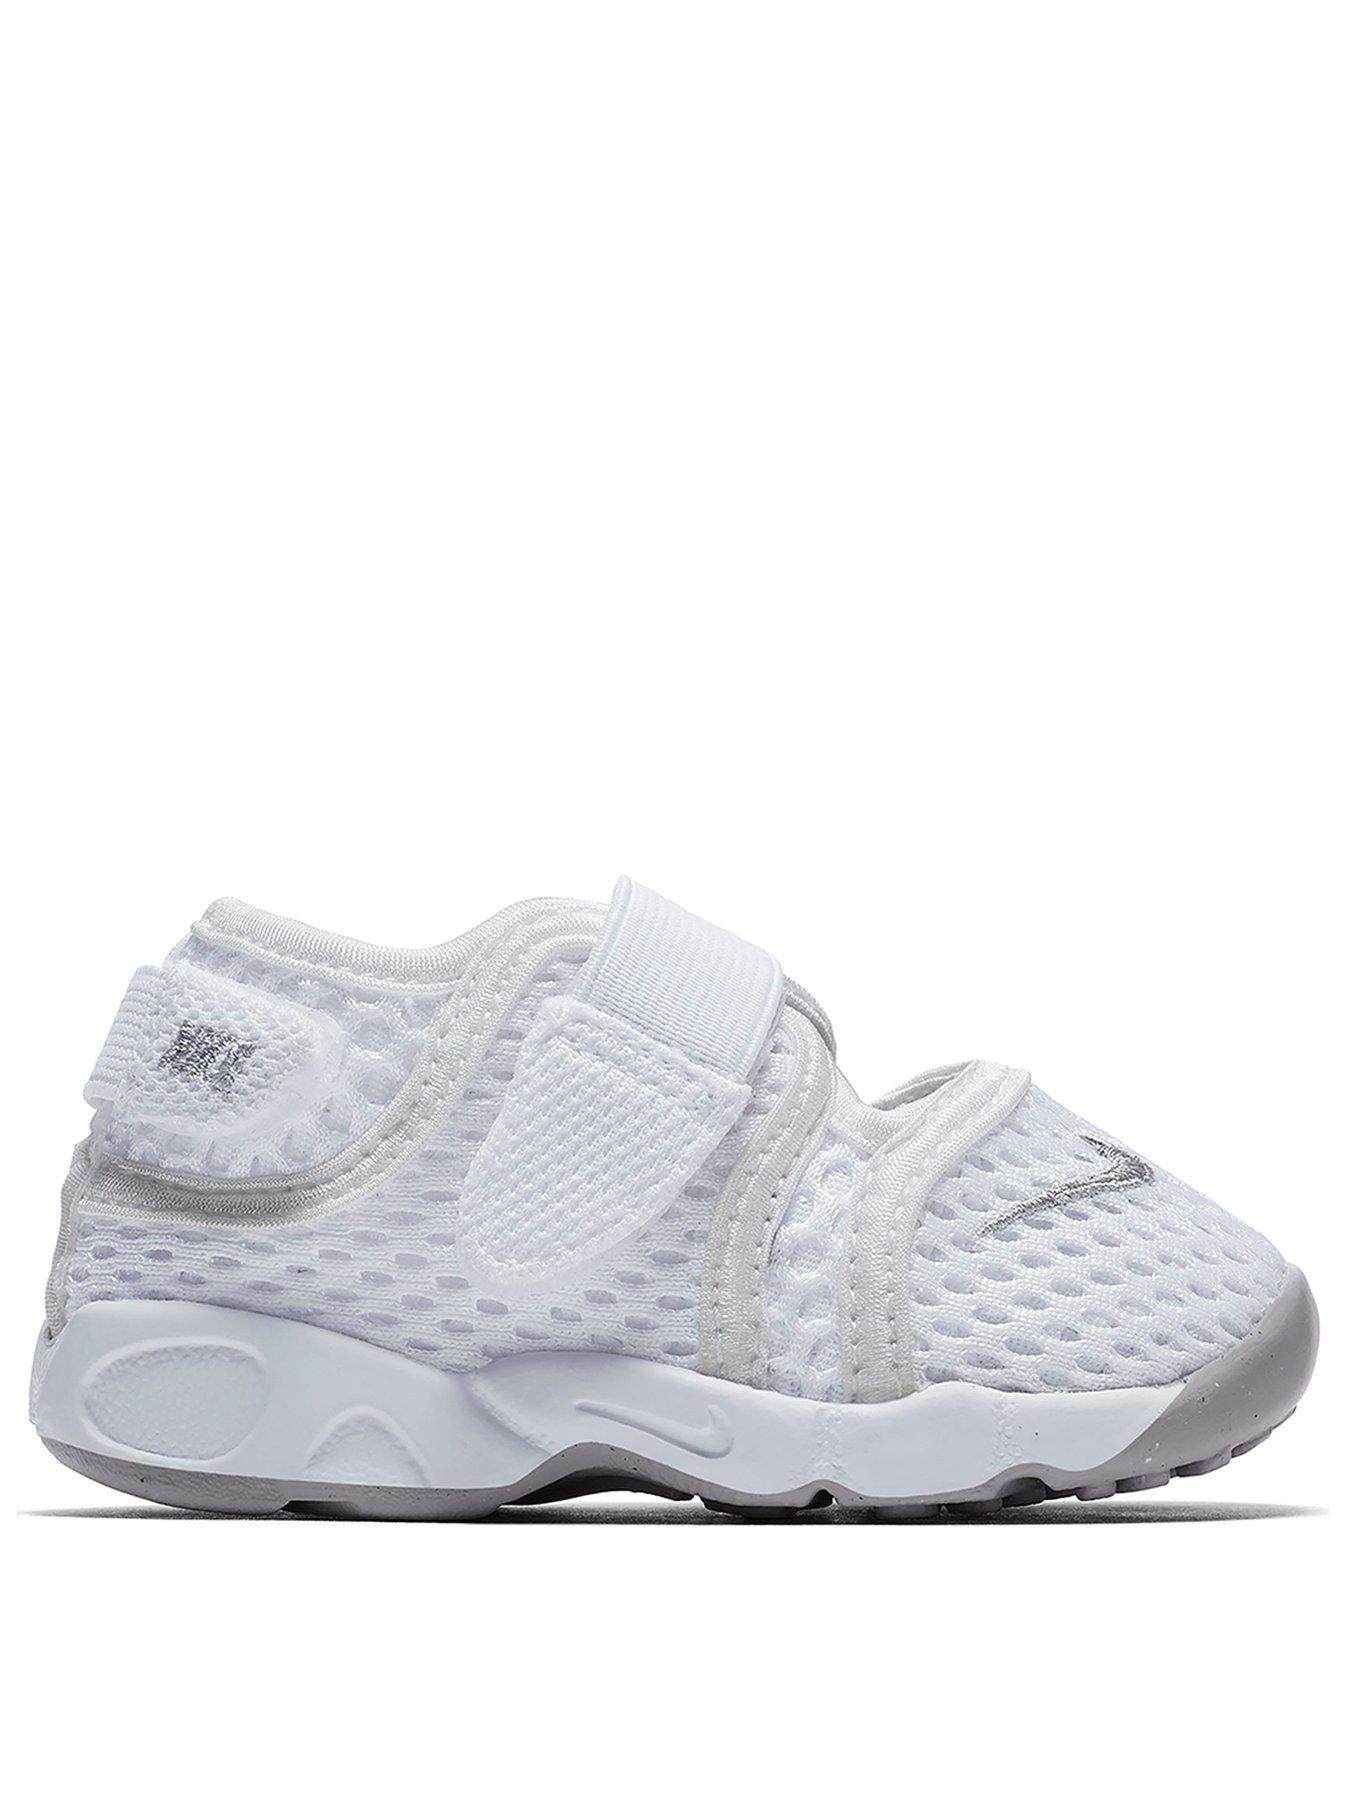 Nike Rift Infants Trainers - White/Grey 